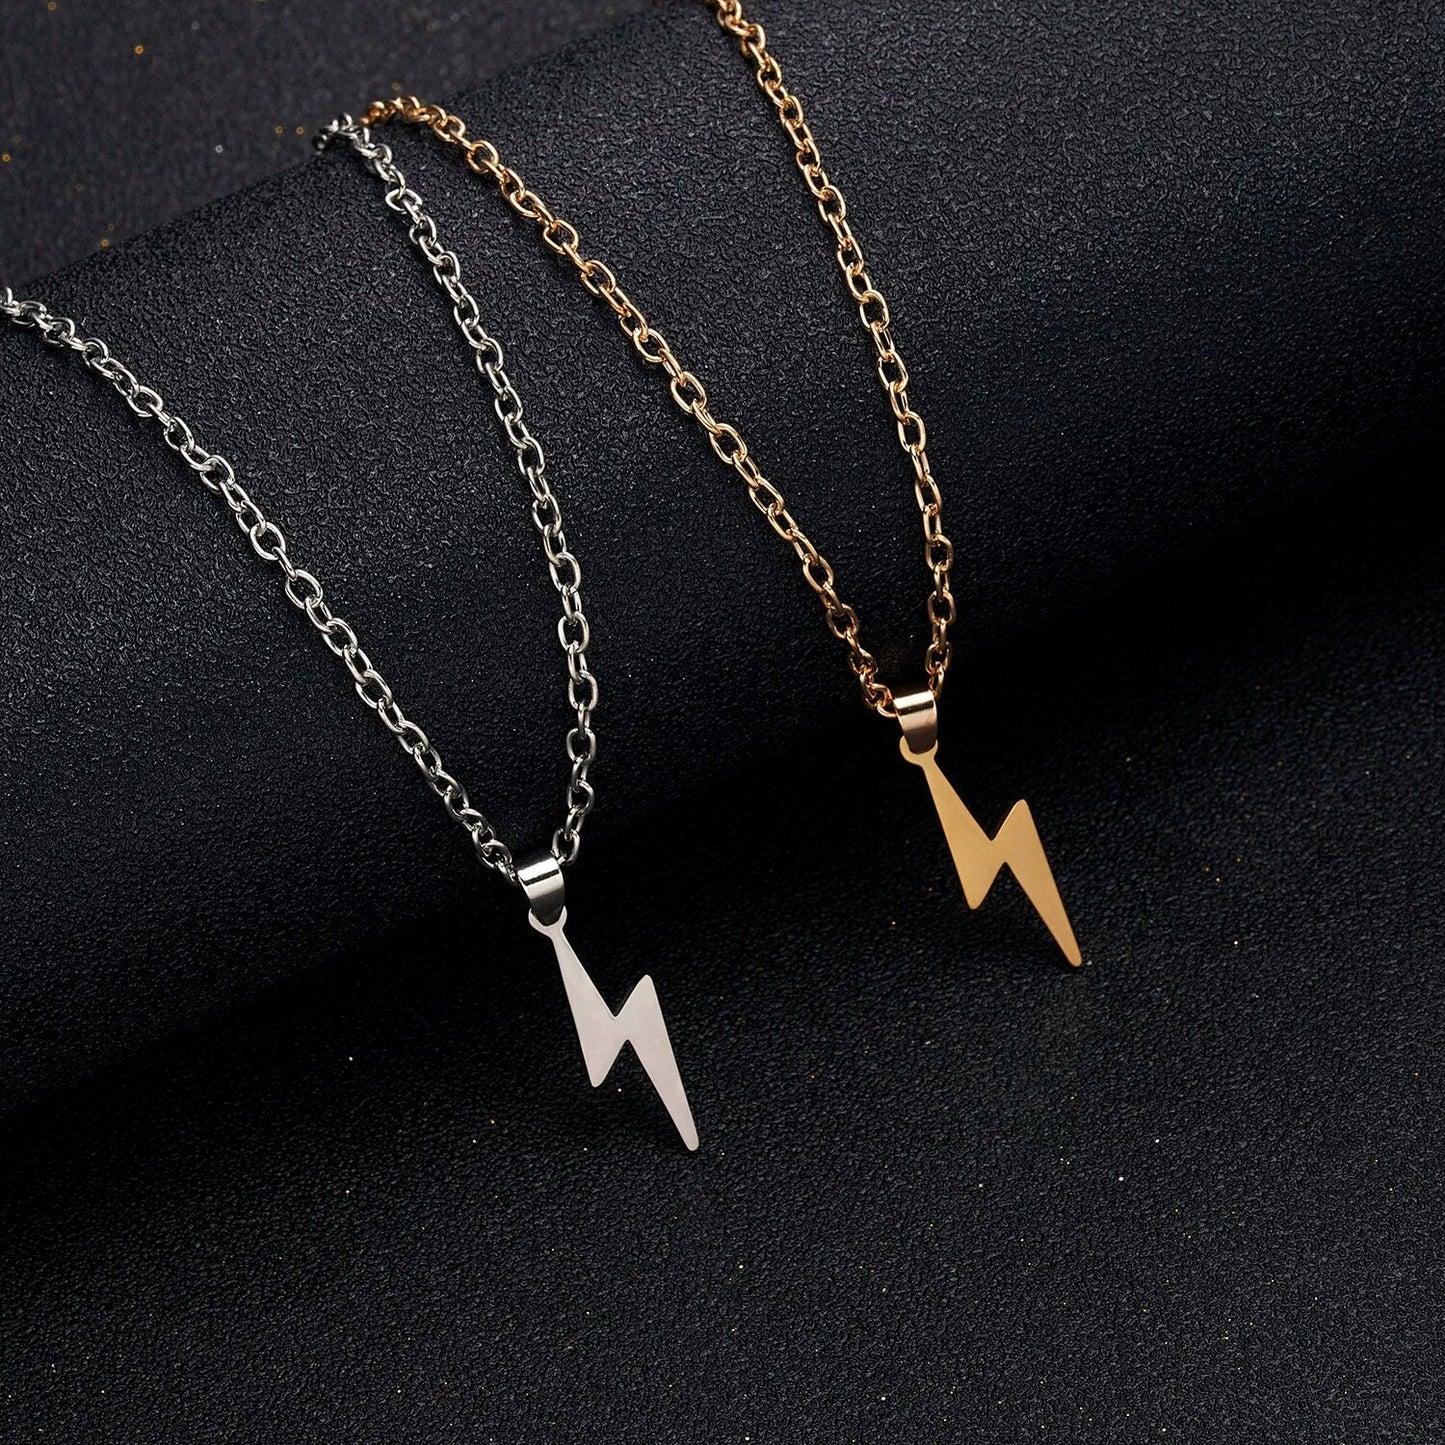 Rinhoo Stainless Steel Necklace For Women Men Long Chain Small Lightning Pendant Necklace